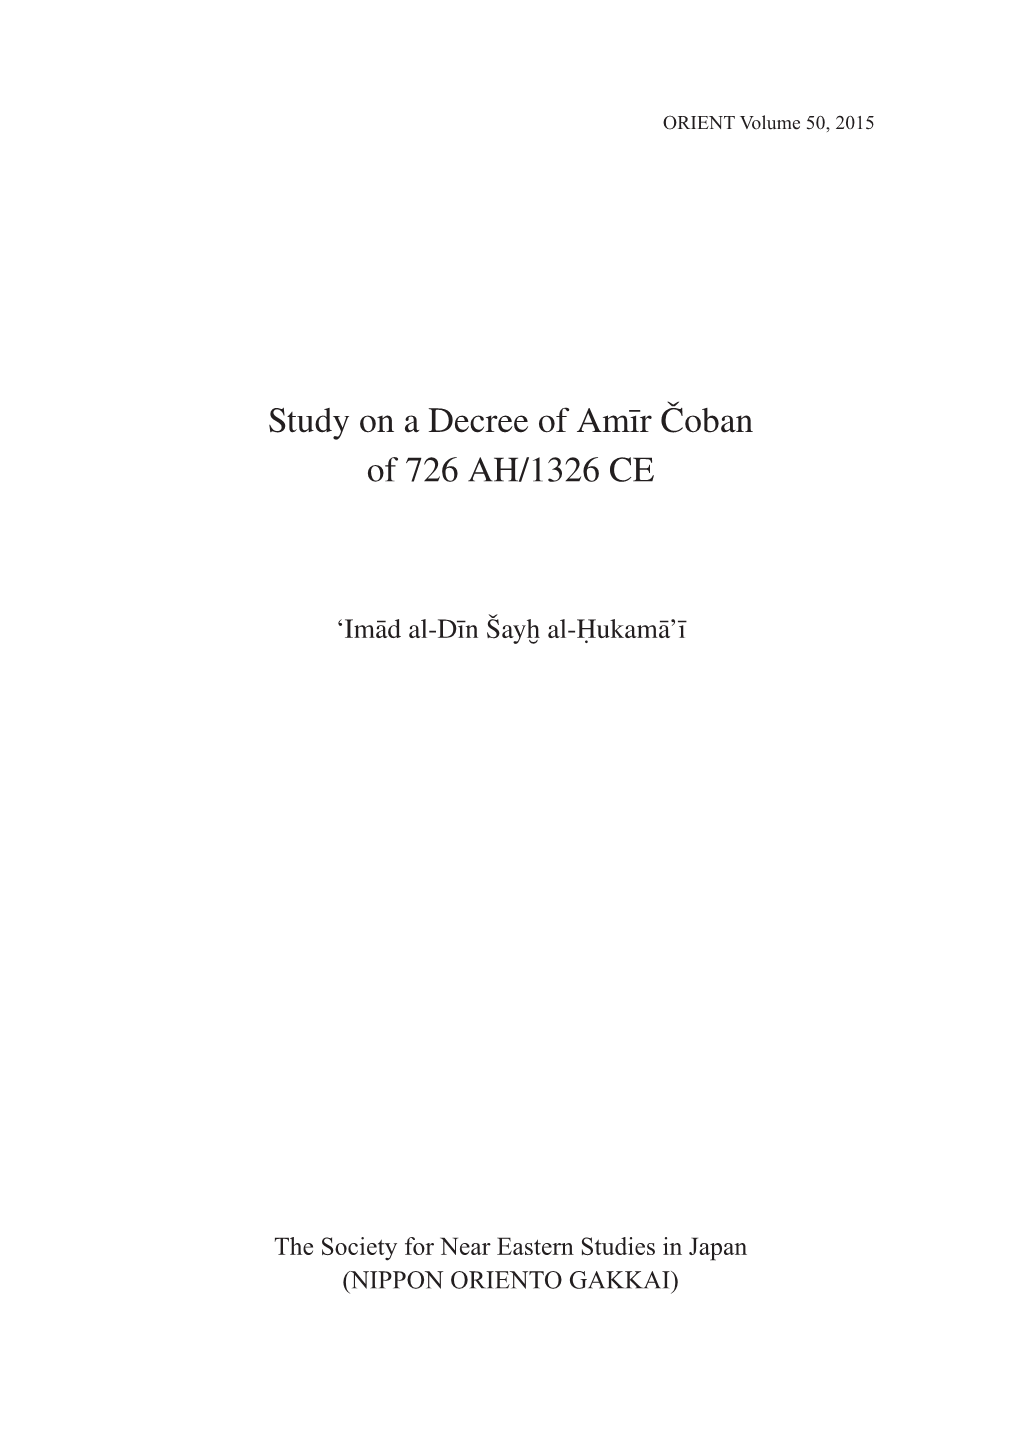 Study on a Decree of Amīr Čoban of 726 AH/1326 CE